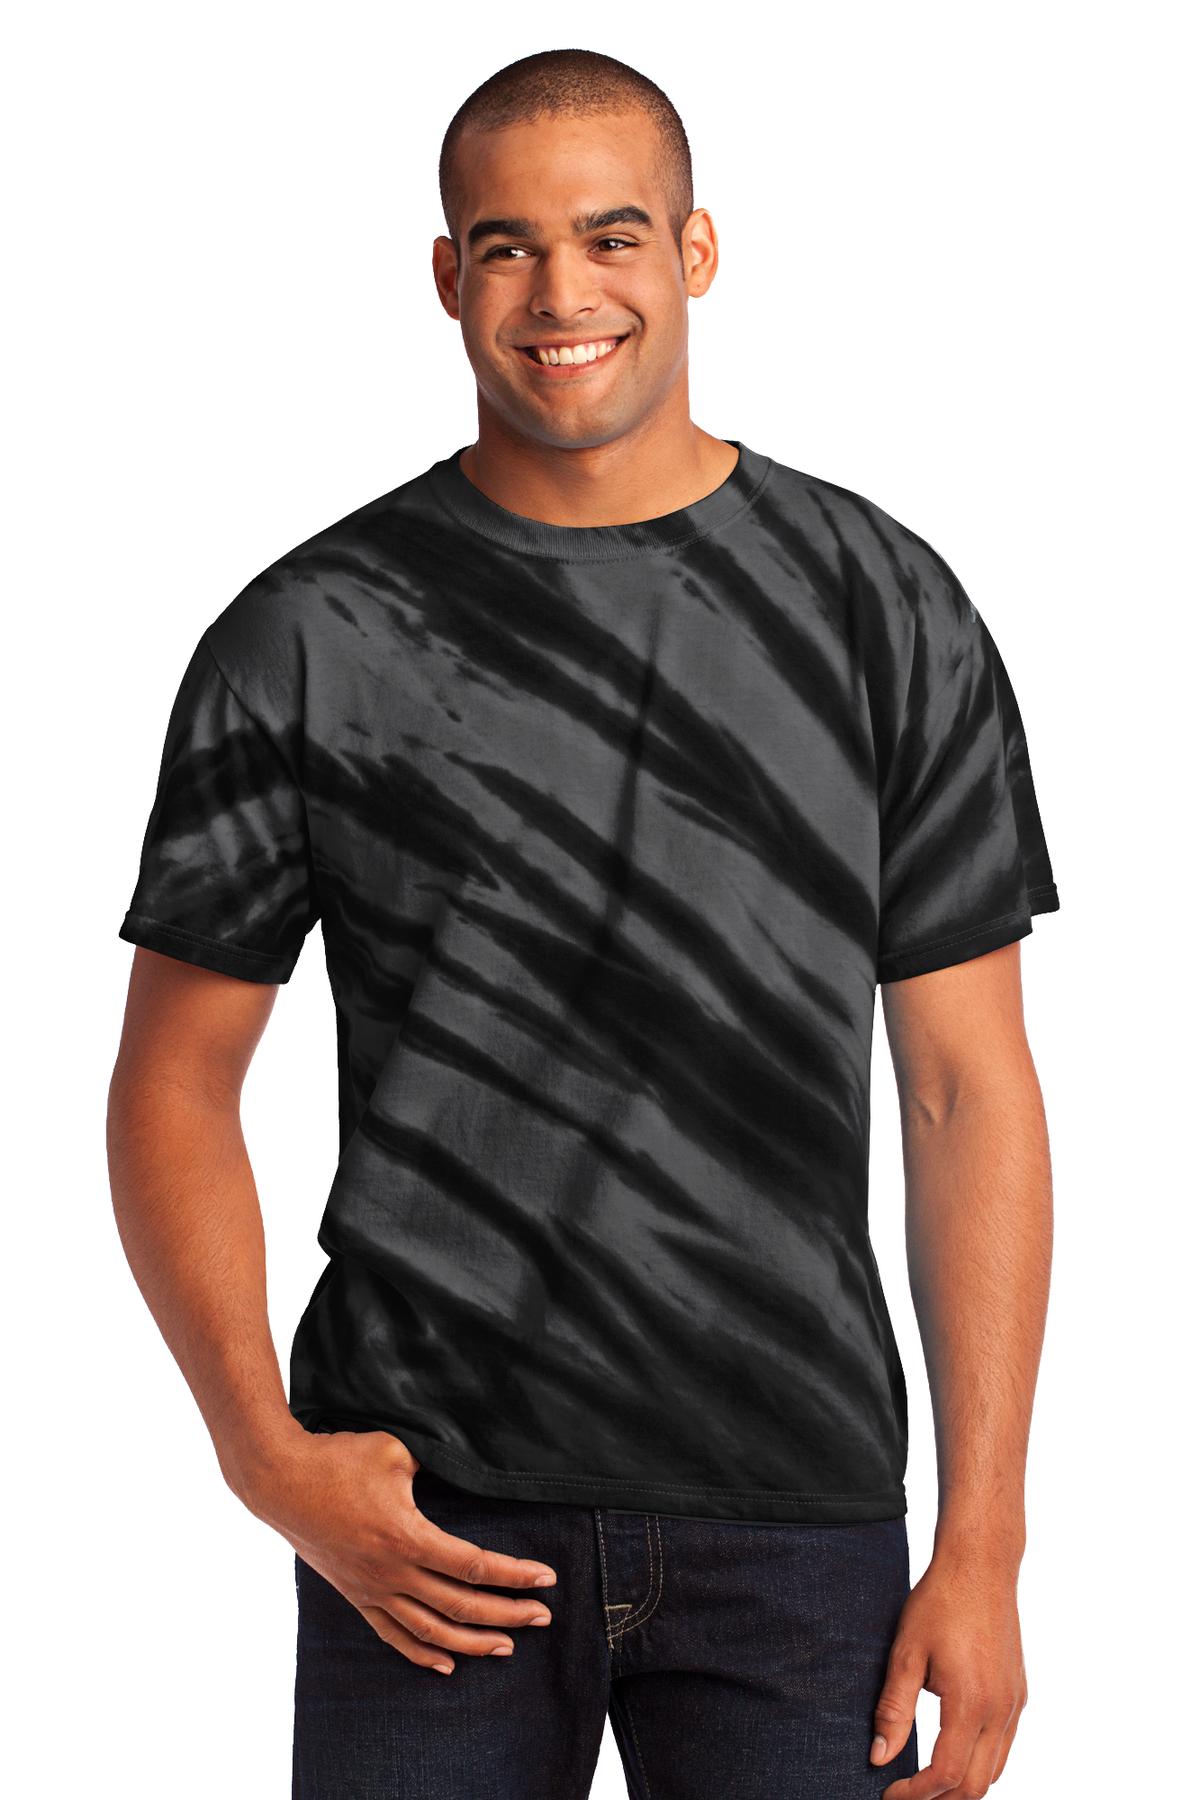 Port & Company Hospitality T-Shirts ® - Tiger Stripe Tie-Dye Tee.-Port & Company